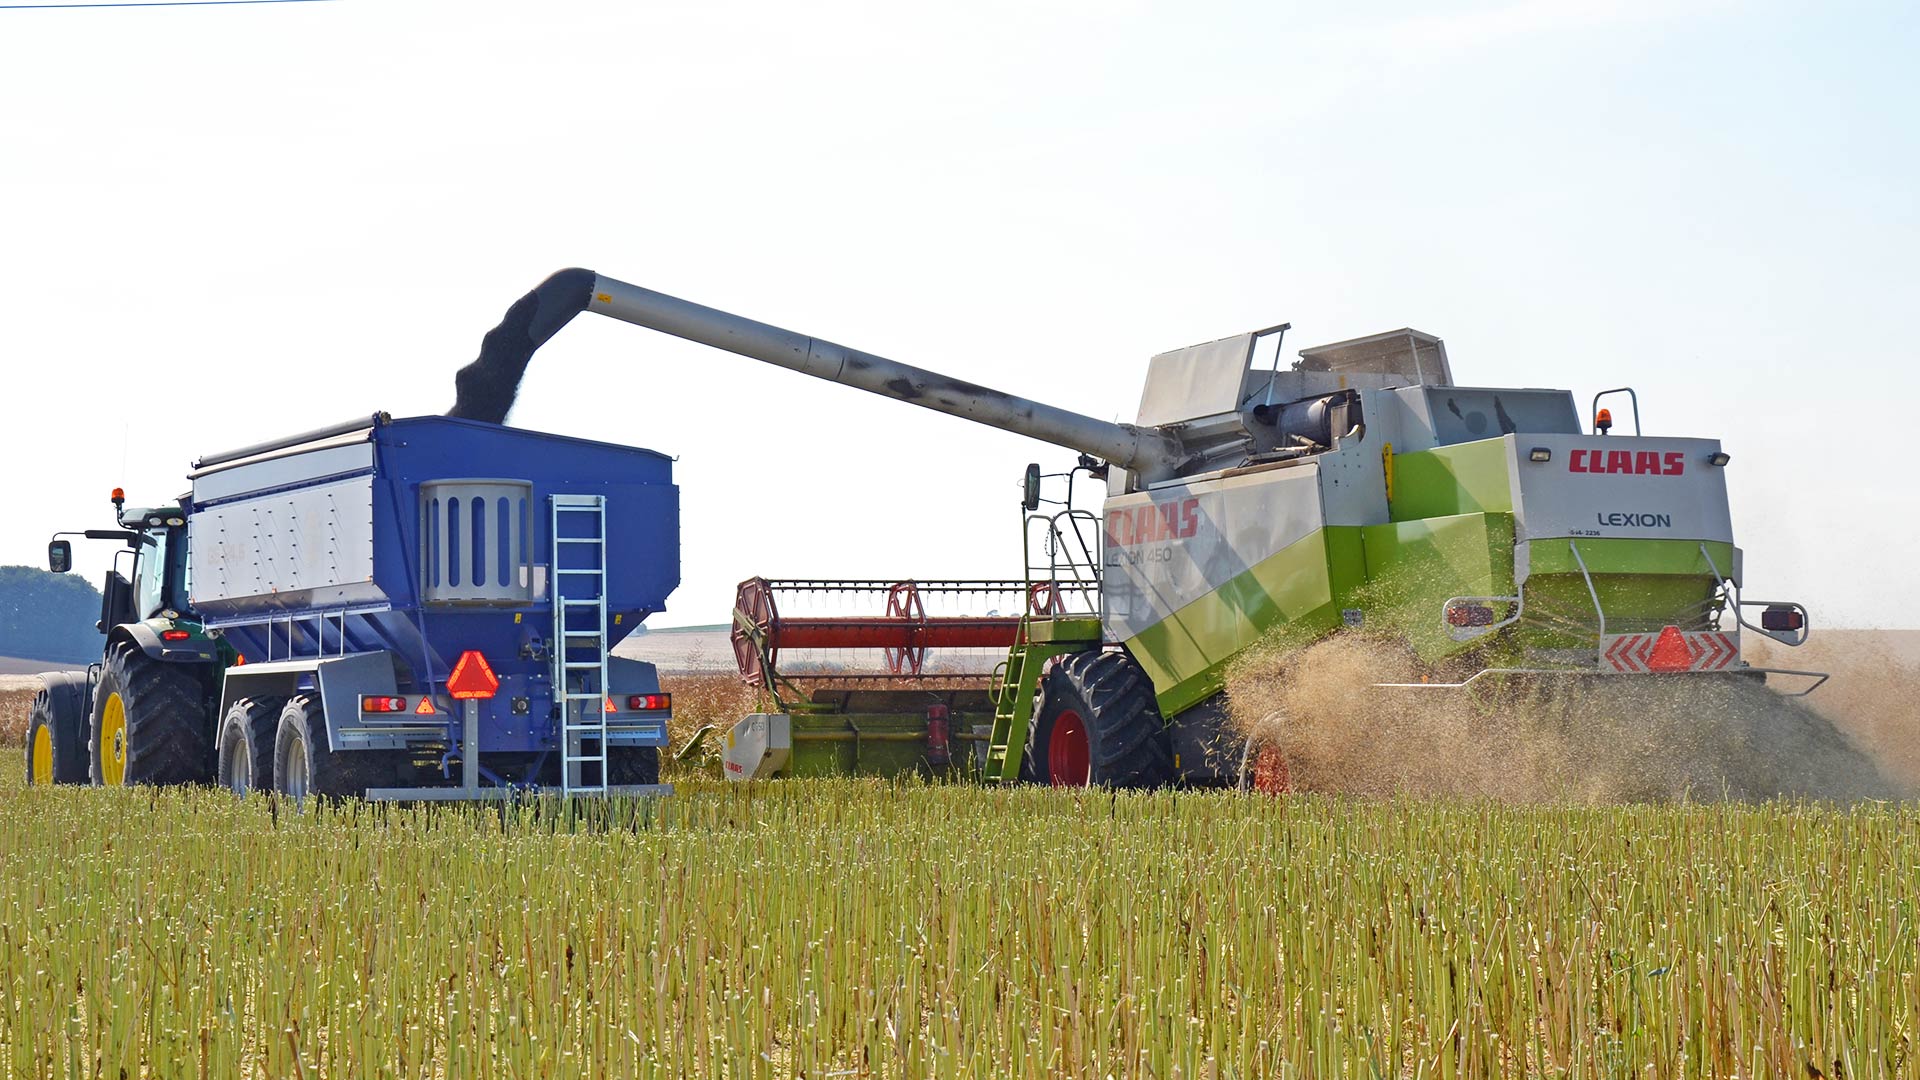 grain trailer gs-24 with claas combine harvesting raps